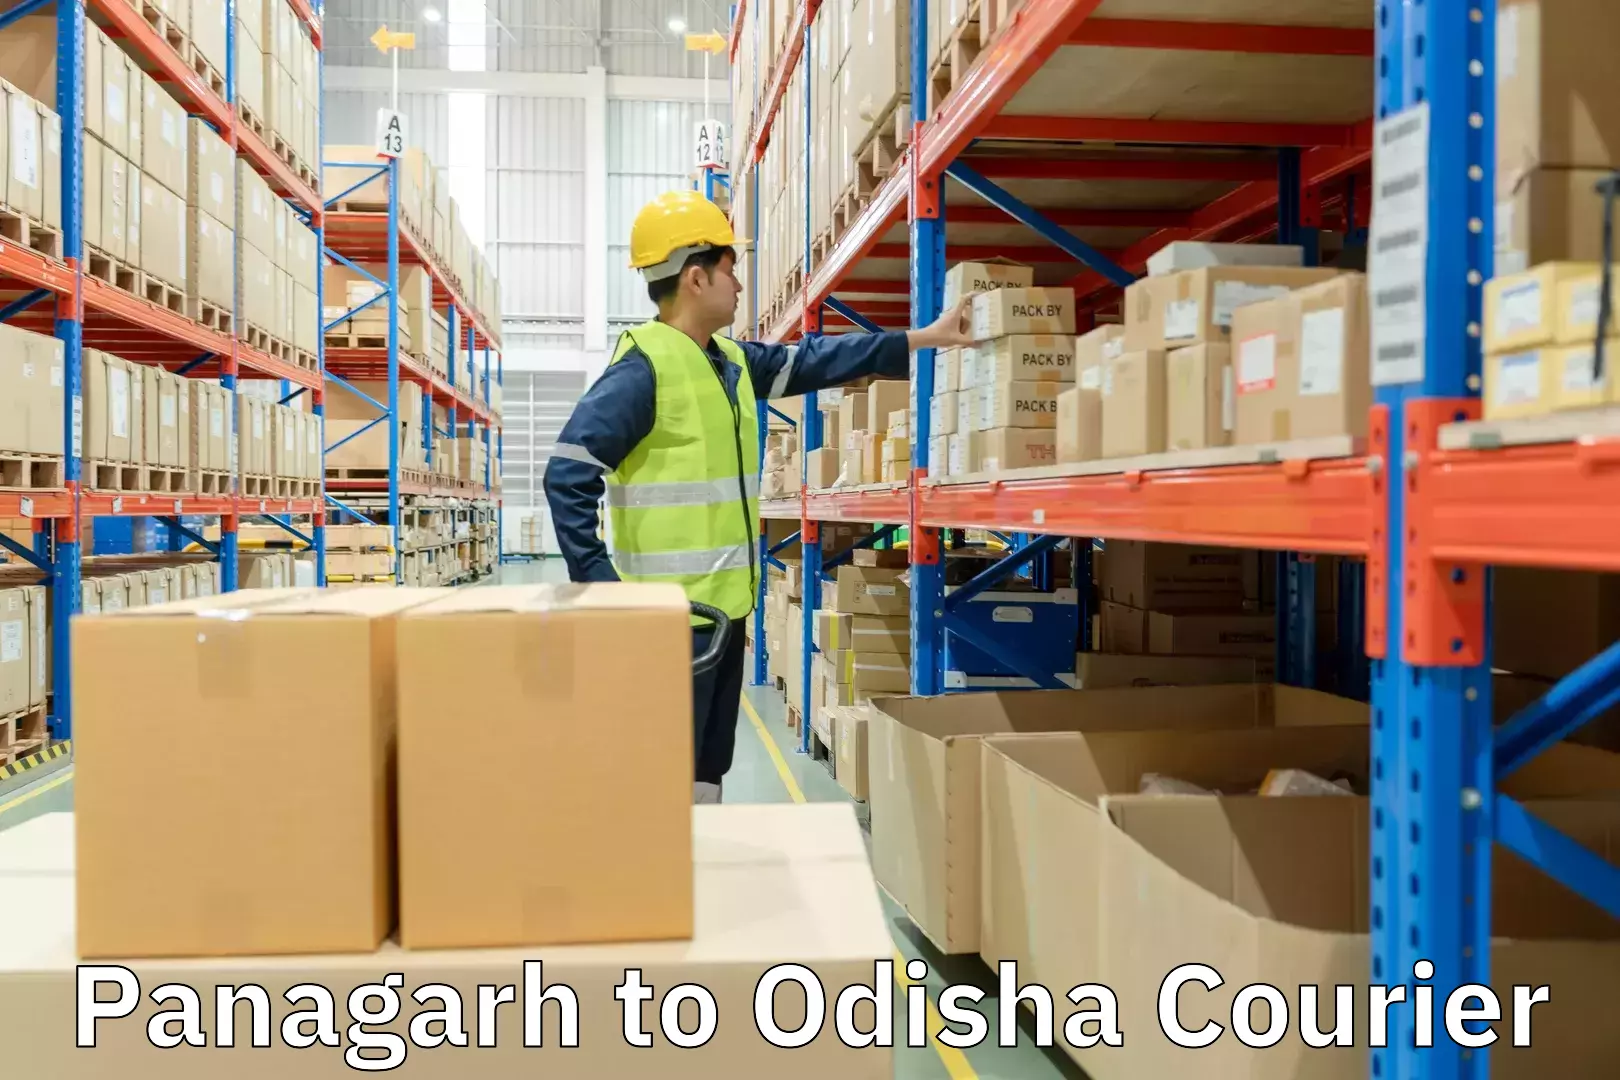 User-friendly delivery service Panagarh to Odisha